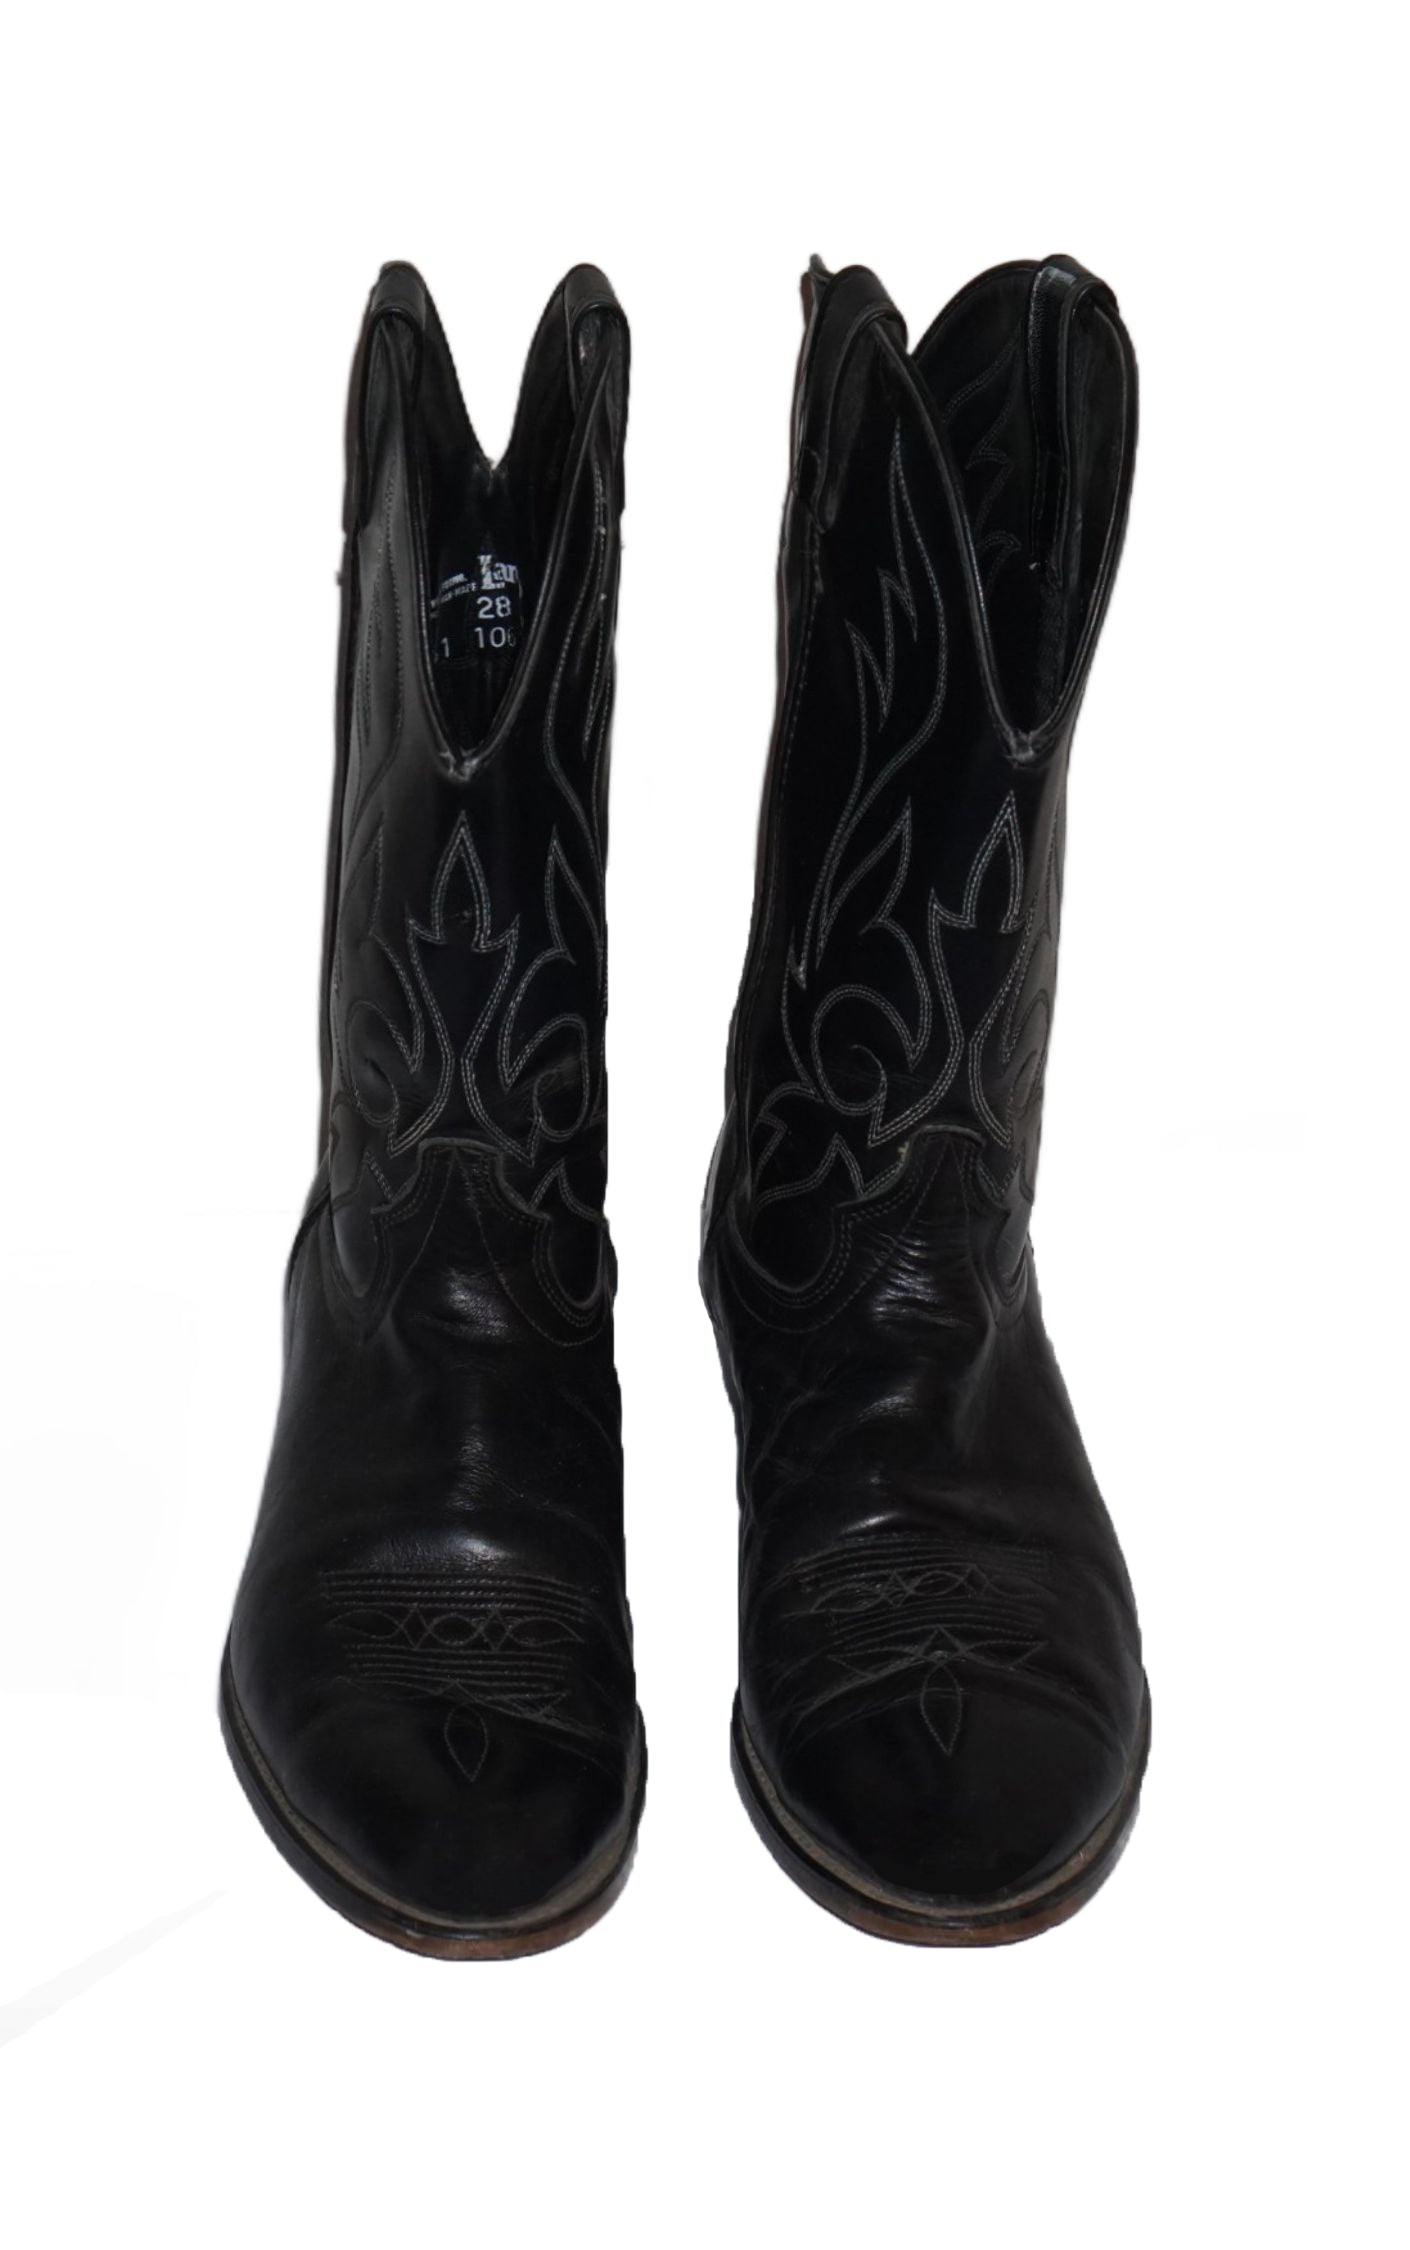 VINTAGE Laredo Black Leather Men's Western Cowboy Boots